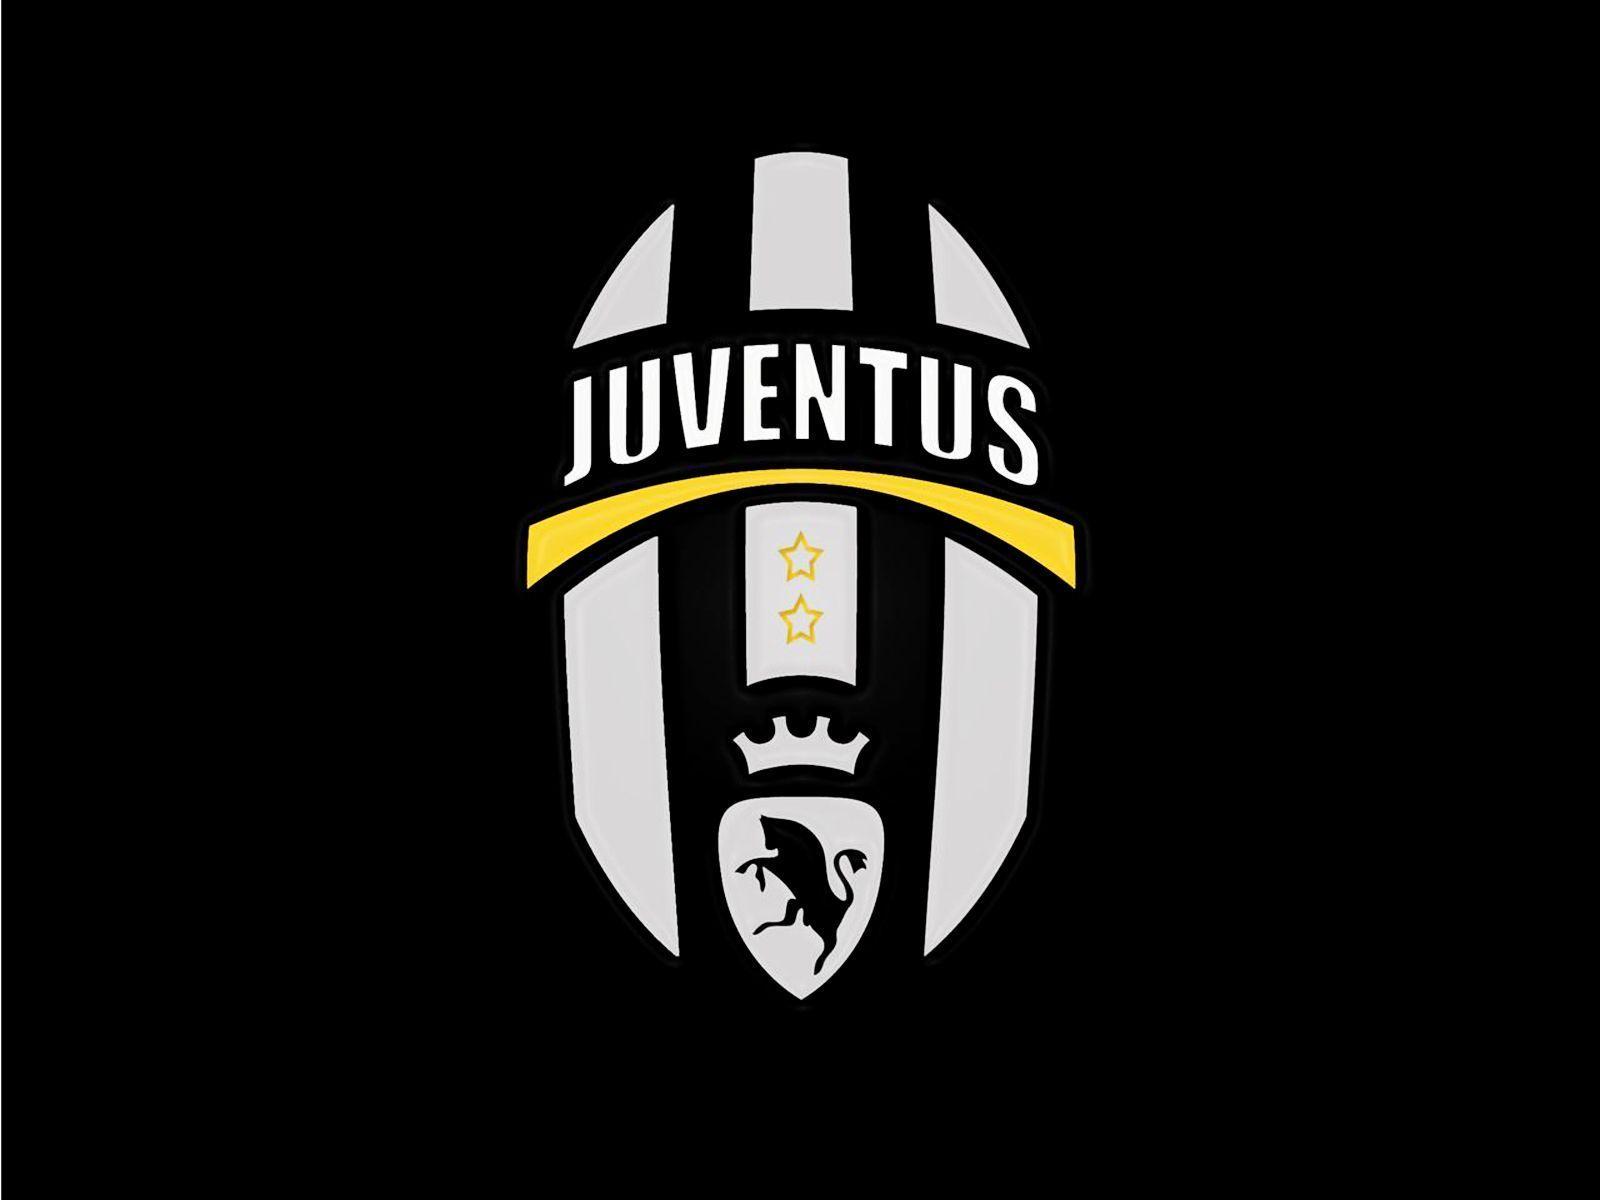 Logo Juventus Wallpapers 2015 - Wallpaper Cave